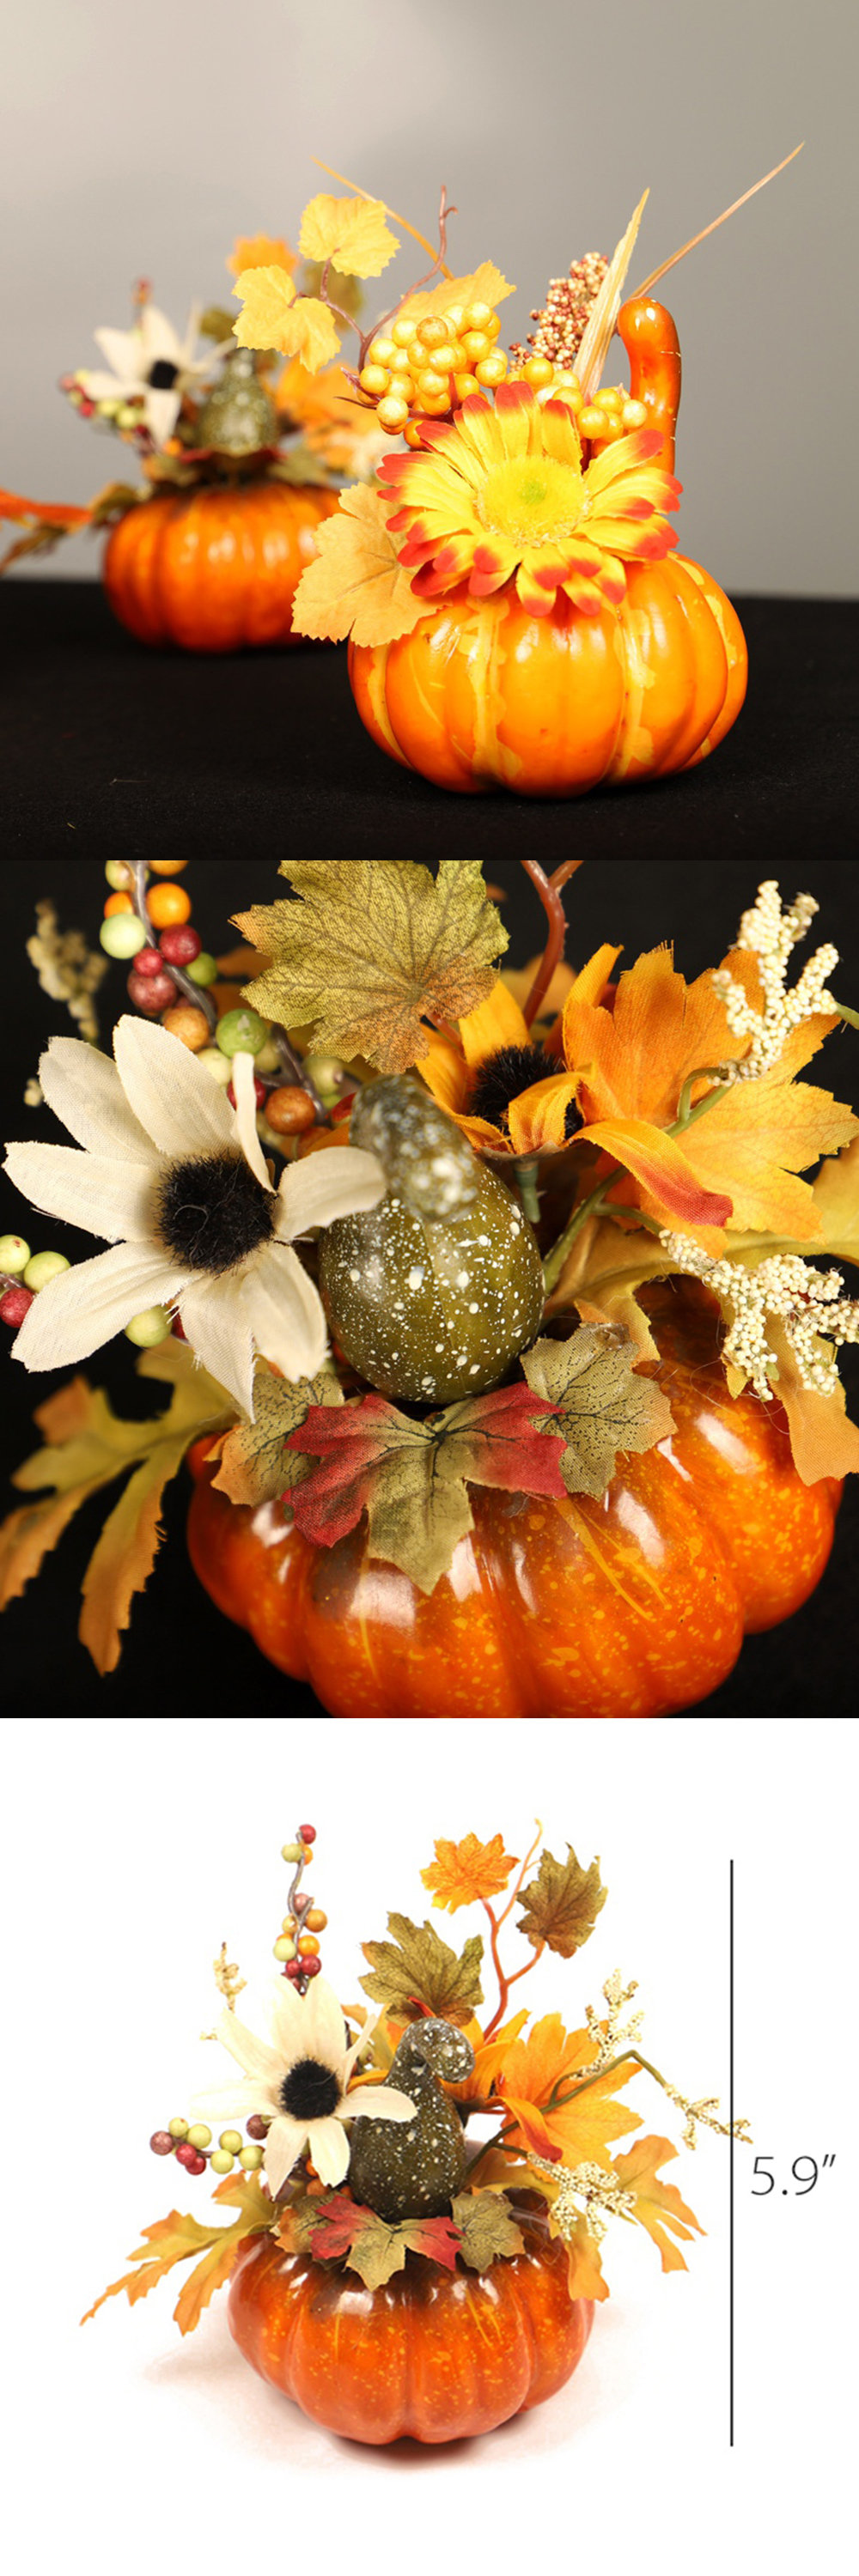 Decorative Pumpkins - ApolloBox